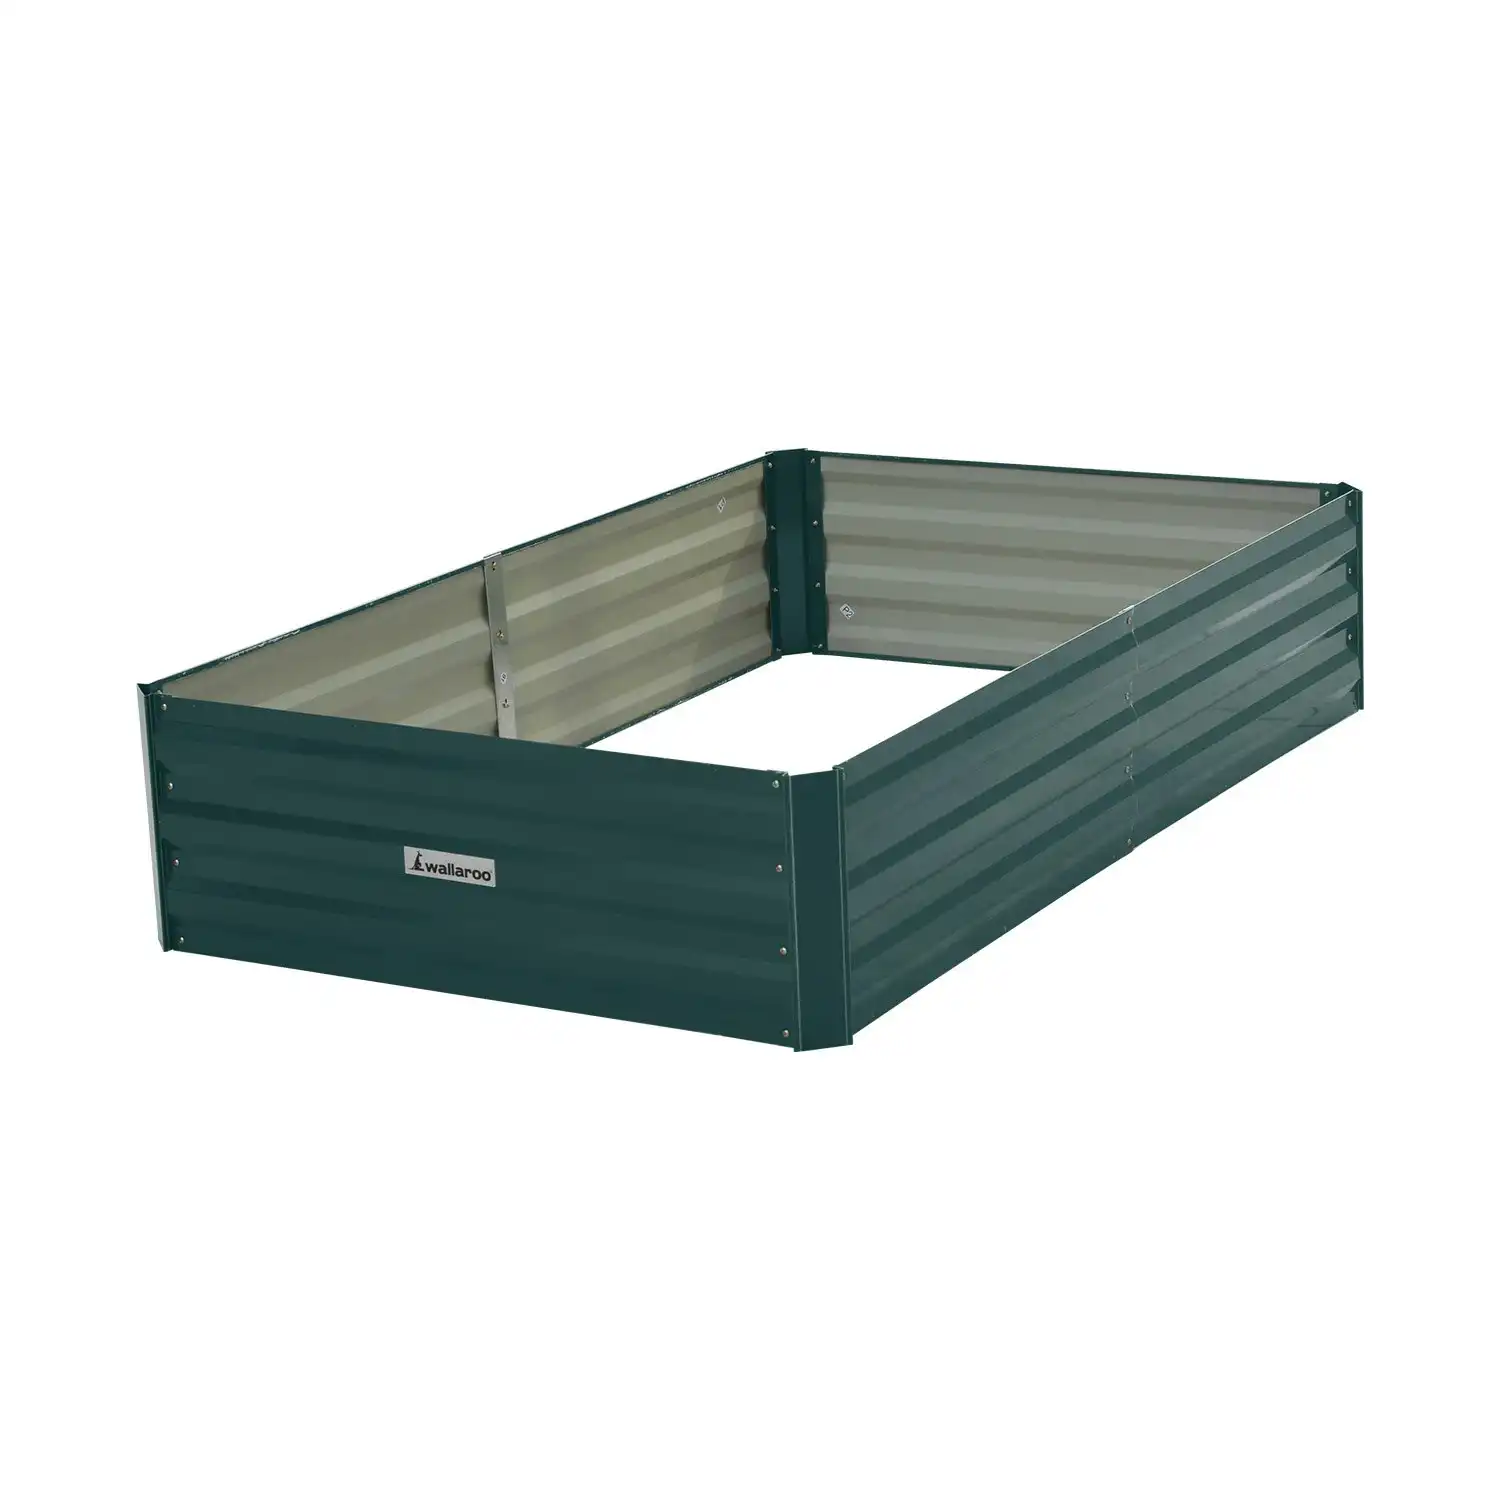 Wallaroo 150 x 90 x 30cm Galvanized Steel Garden Bed - Green